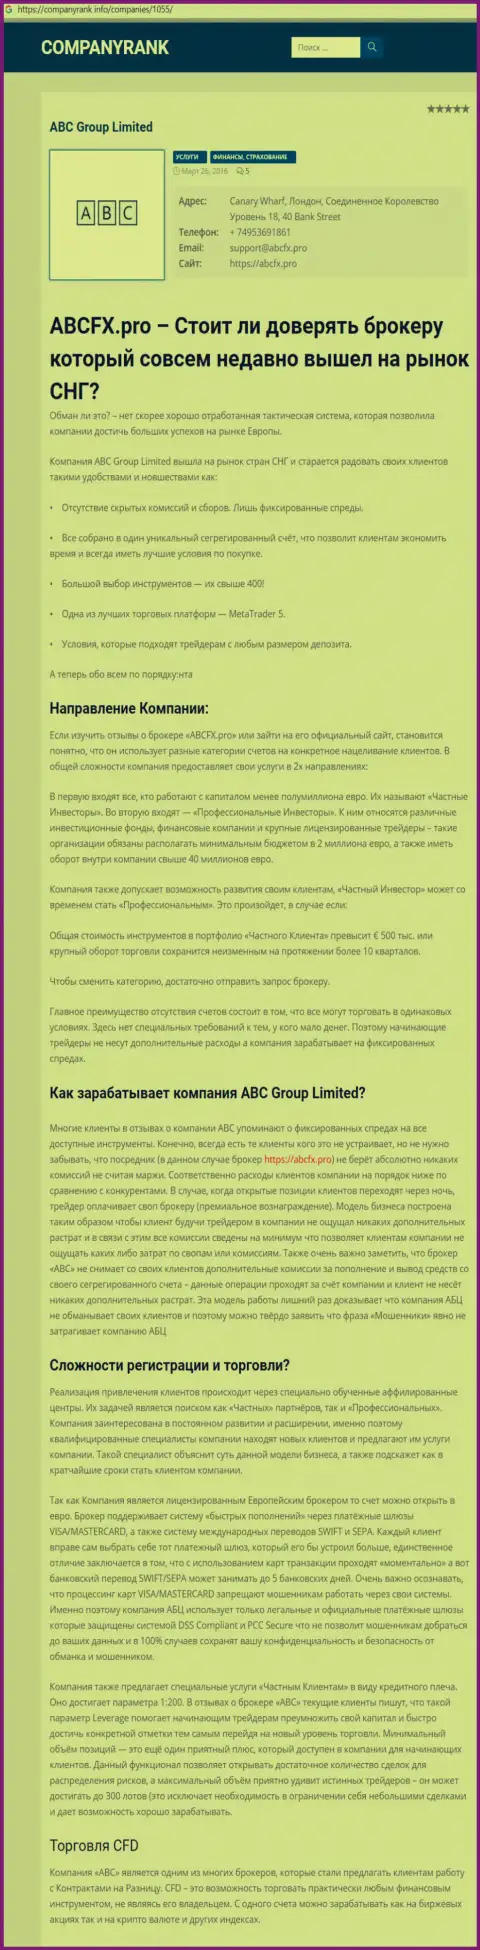 О форекс организации АБЦ Групп на web-ресурсе Компани Ранк Инфо